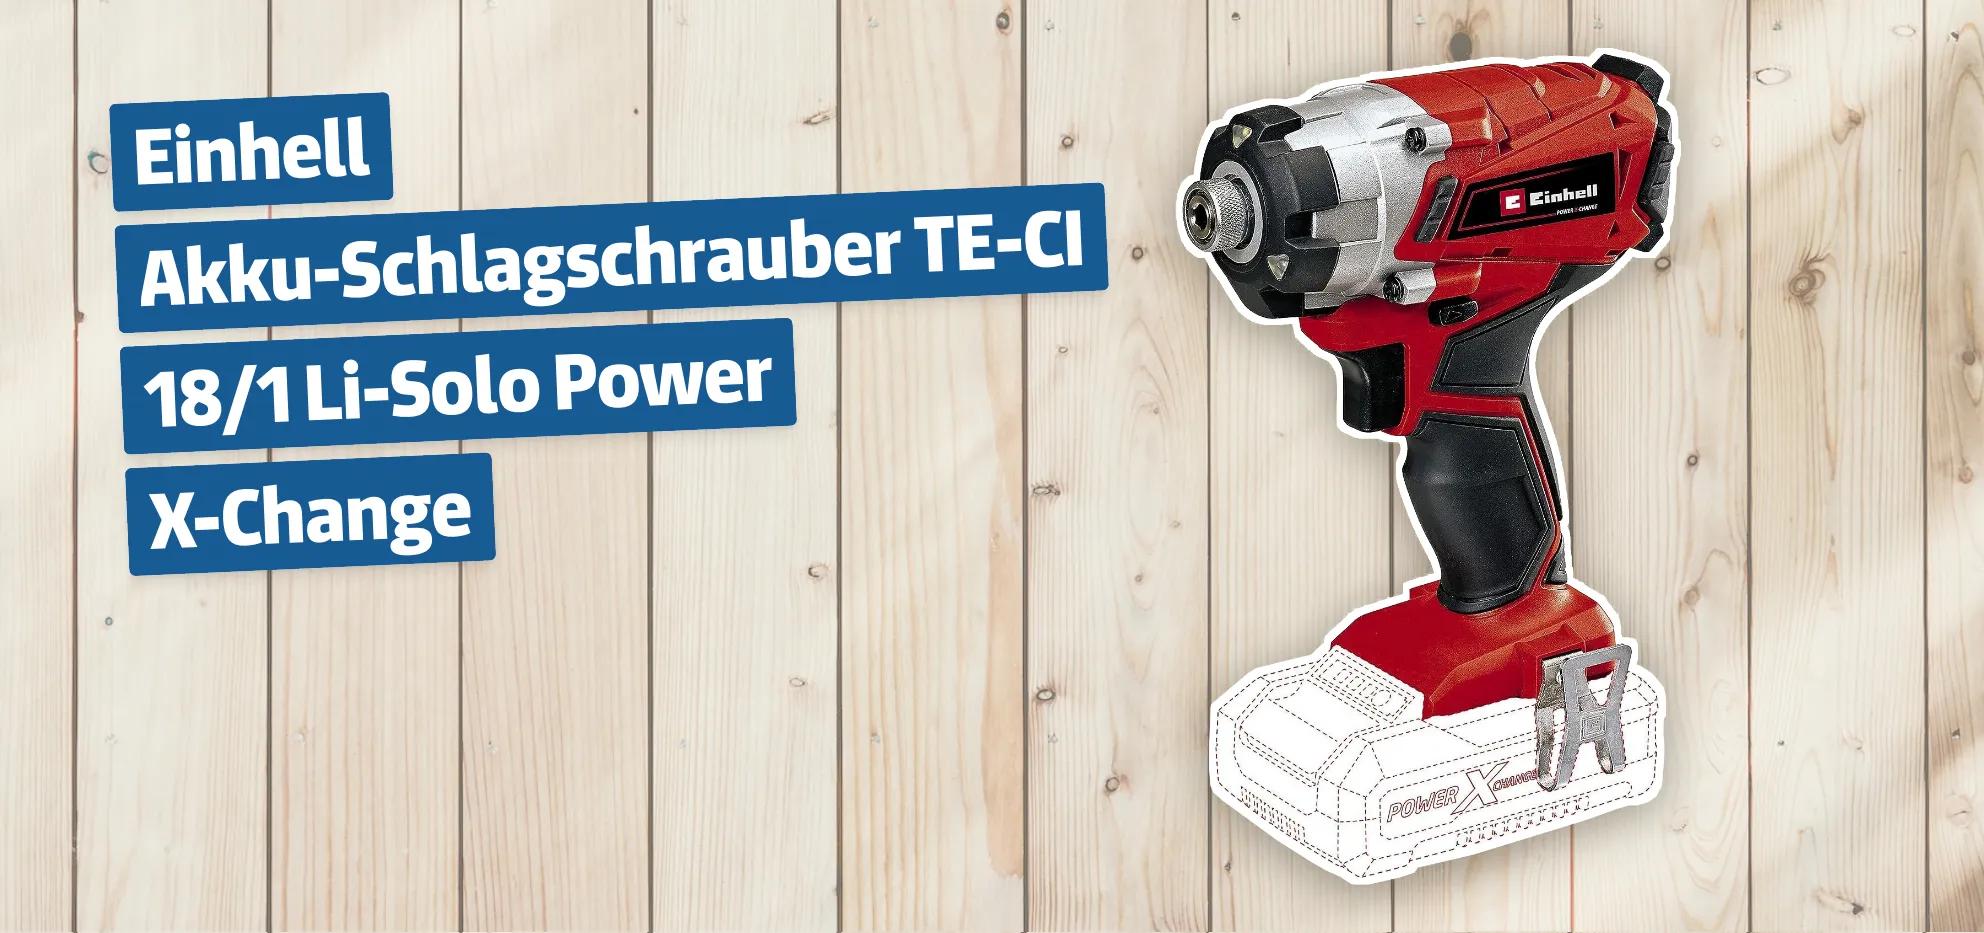 Einhell Akku-Schlagschrauber TE-CI 18/1 Li-Solo Power X-Change